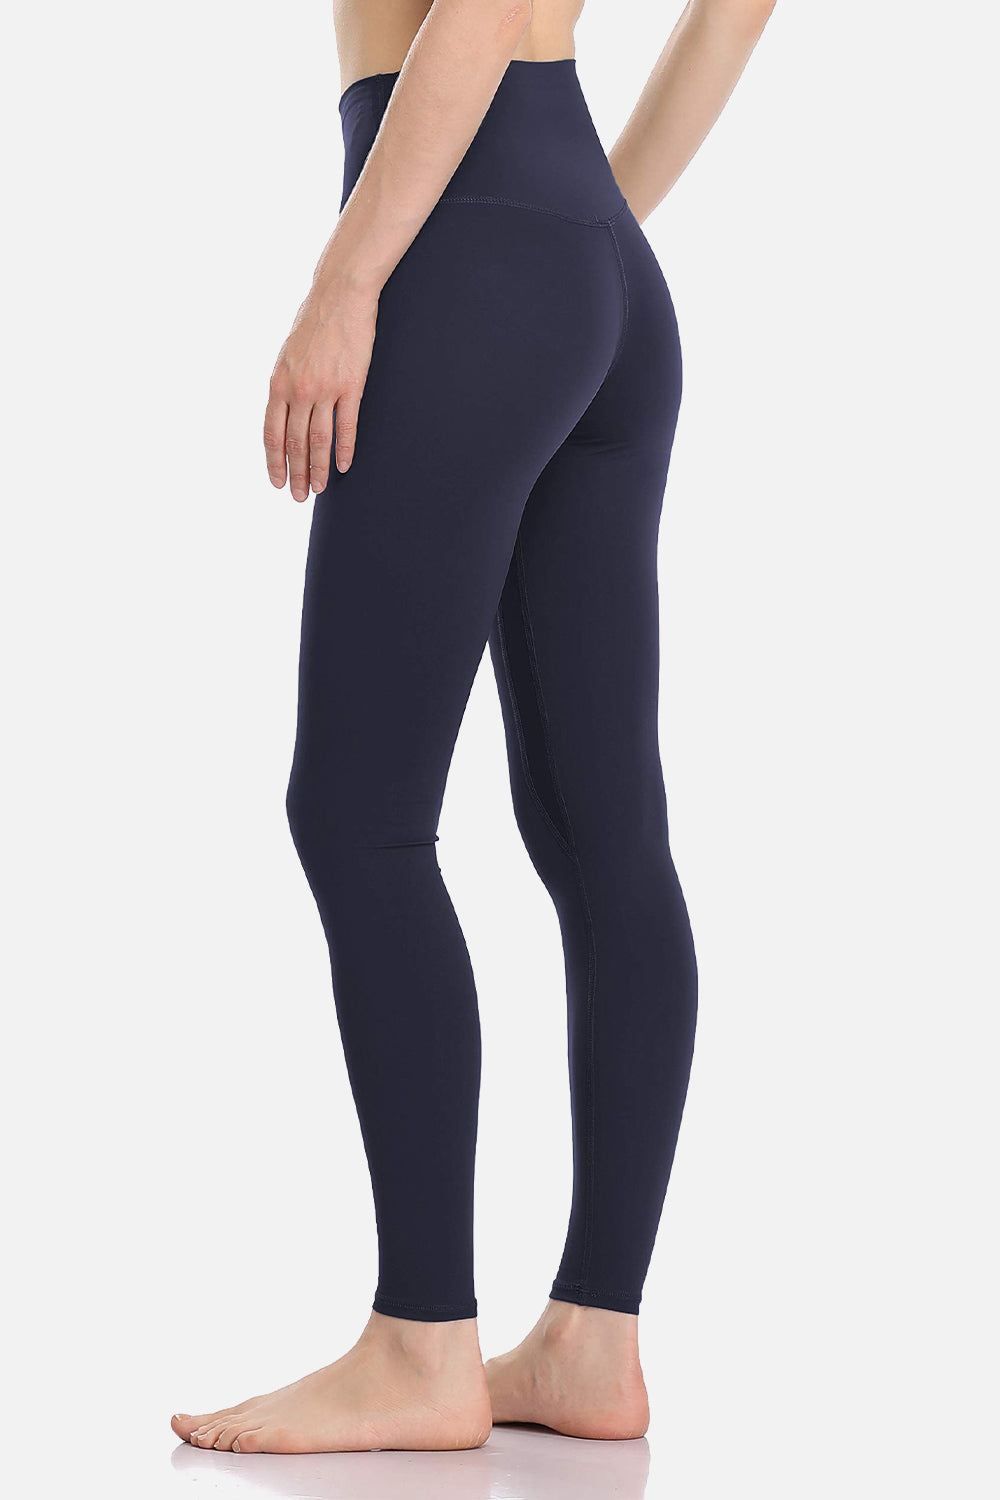 Colorfulkoala Women's High Waisted Tummy Control Workout Leggings 7/8  Length Ultra Soft Yoga Pants 28 (L, Mauve Pink)